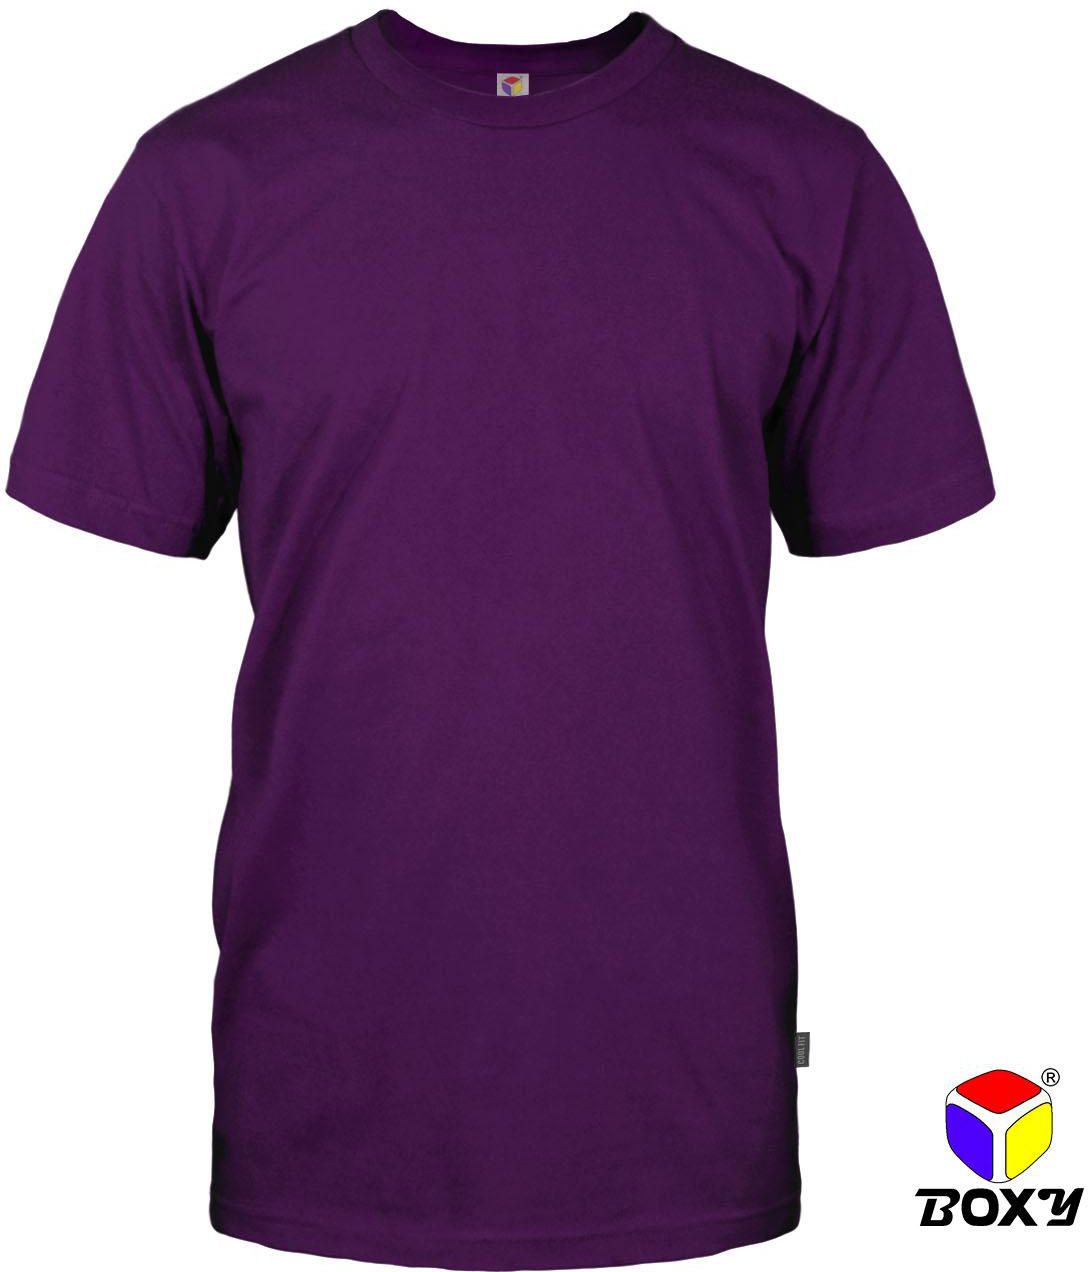 Boxy Microfiber Round Neck Plain T-shirt - 7 Sizes (Dark Violet)